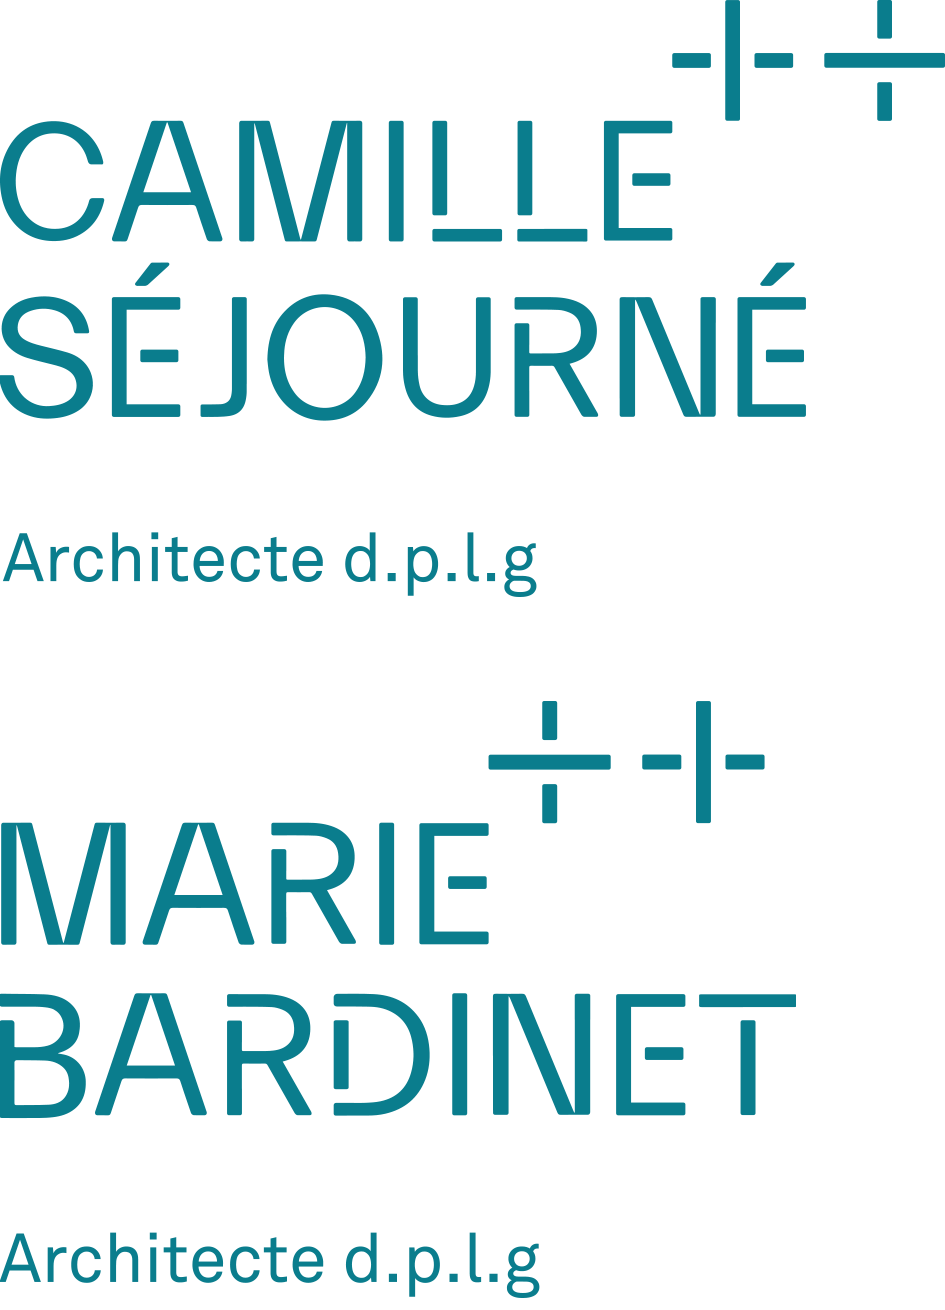 Camille SÉJOURNÉ + Marie BARDINET